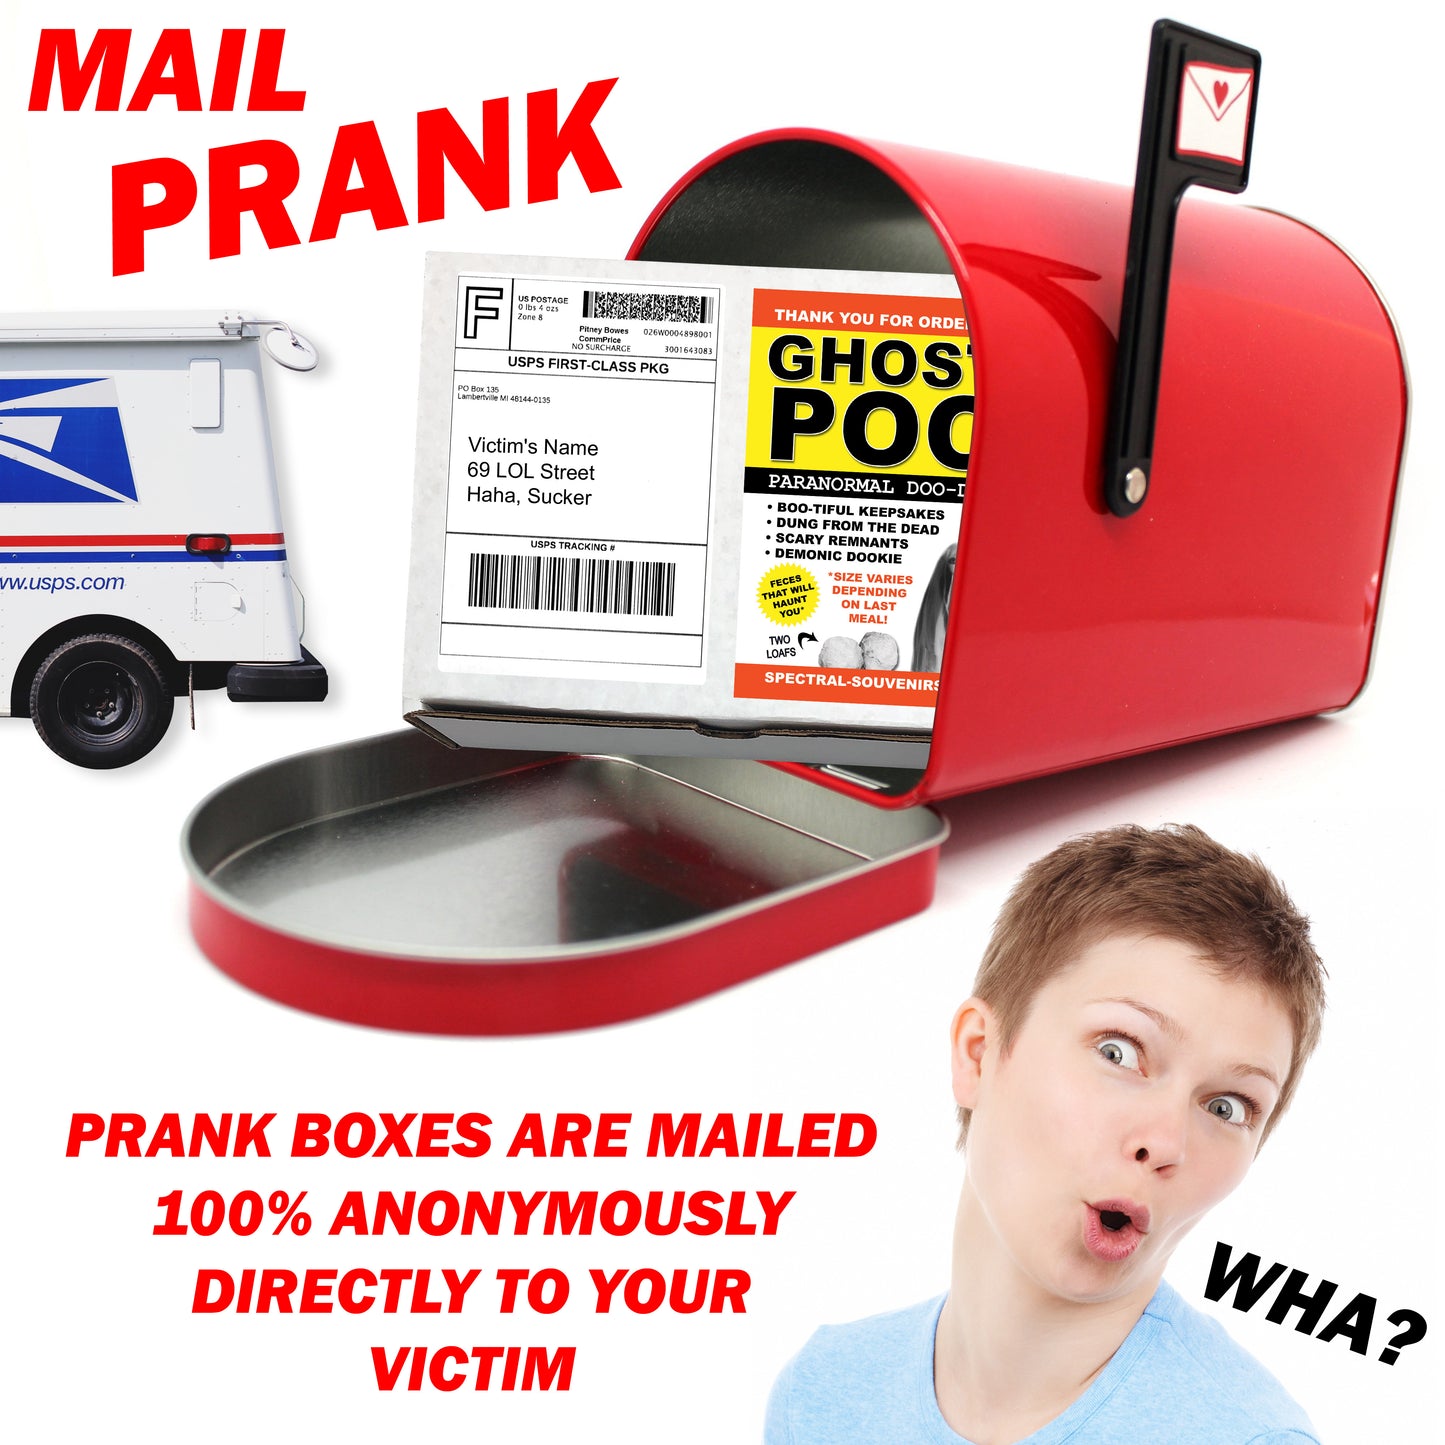 Ghost Poo Postal Mail Prank